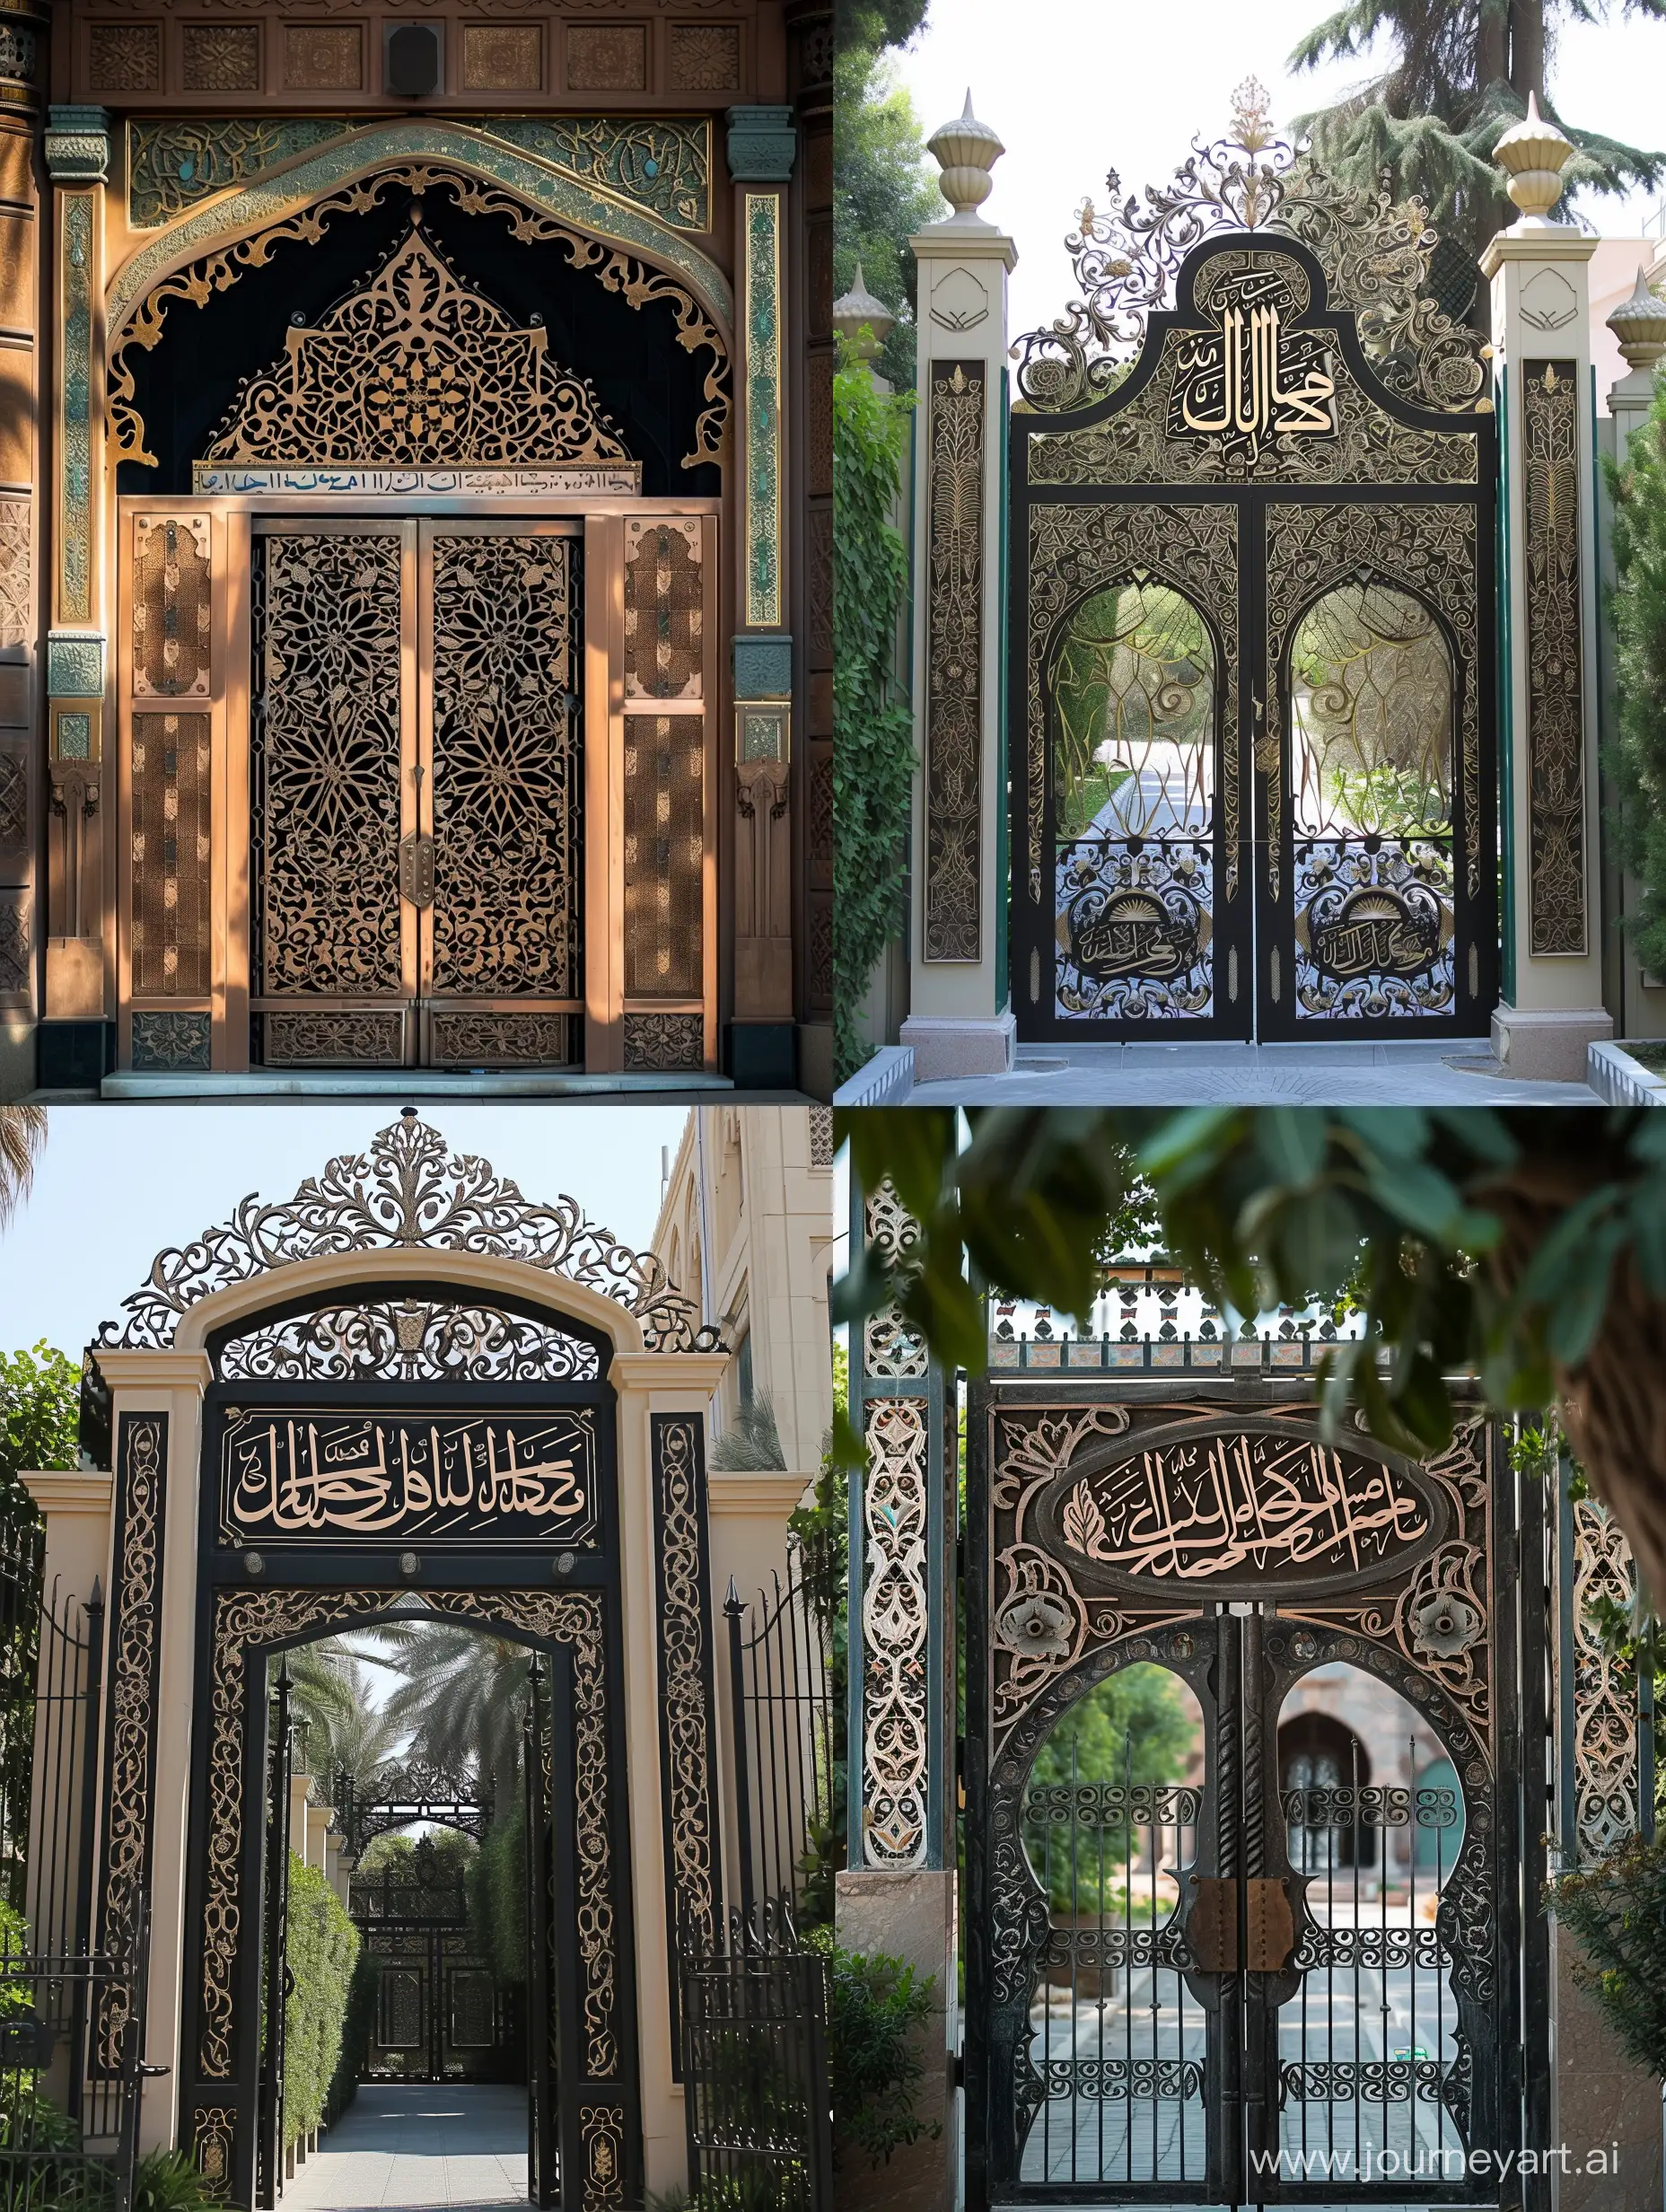 Ornate-Arabic-Gate-with-Kingdom-of-Saudi-Arabia-Inscription